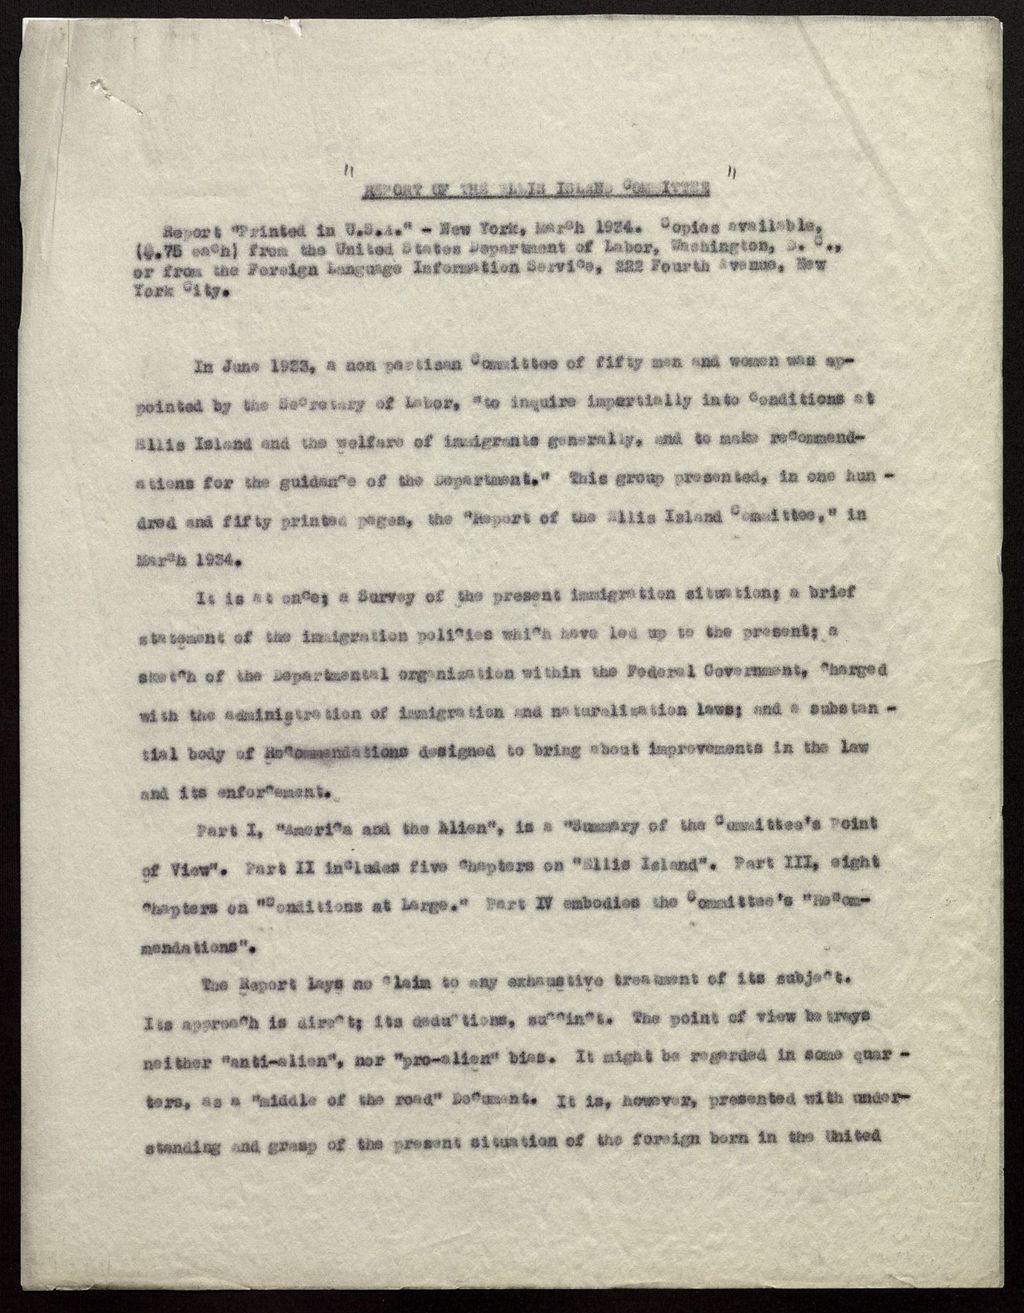 Miniature of Social Service Review - Ellis Island Committee Report, 1934-1937 (Folder 106)